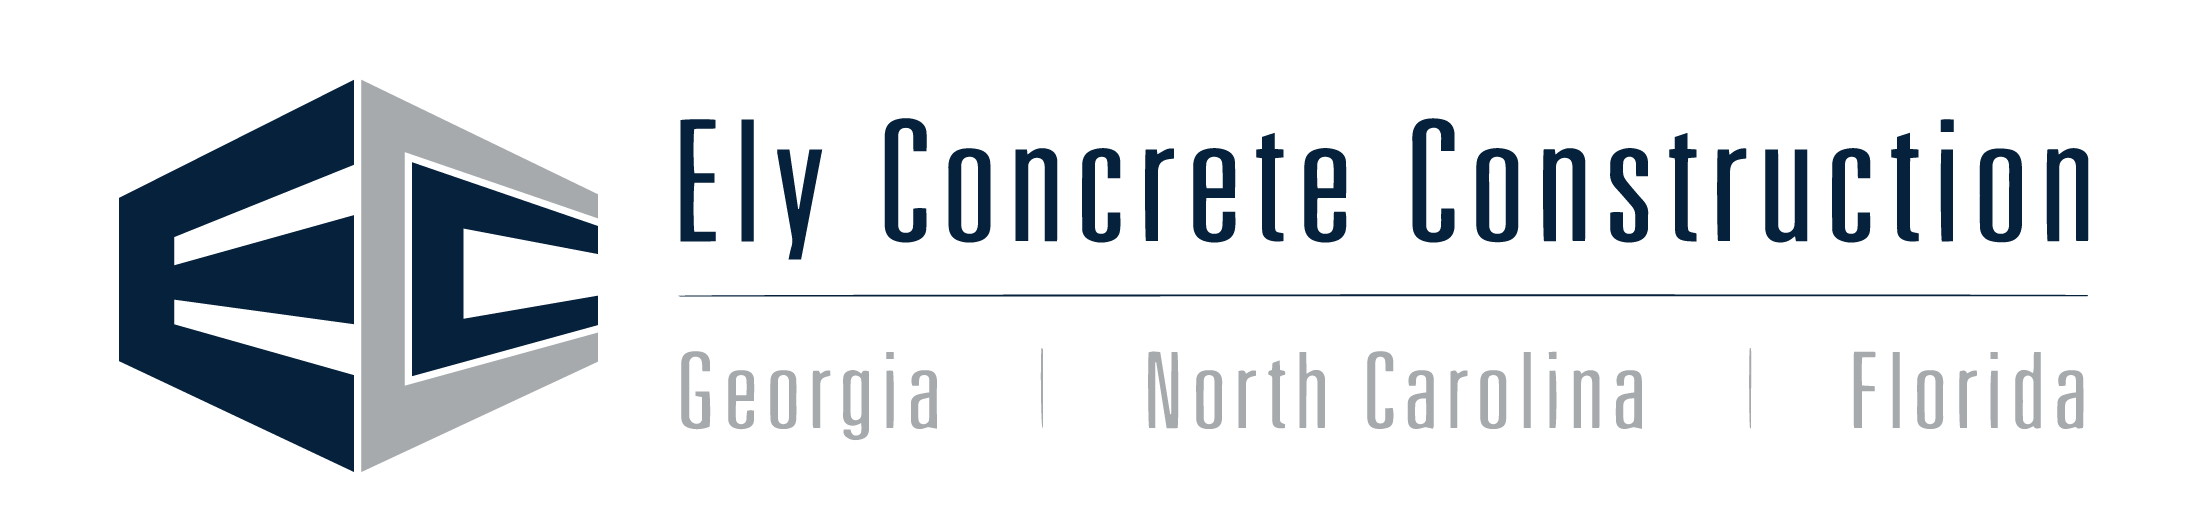 Ely_Concrete-Logo-01.png